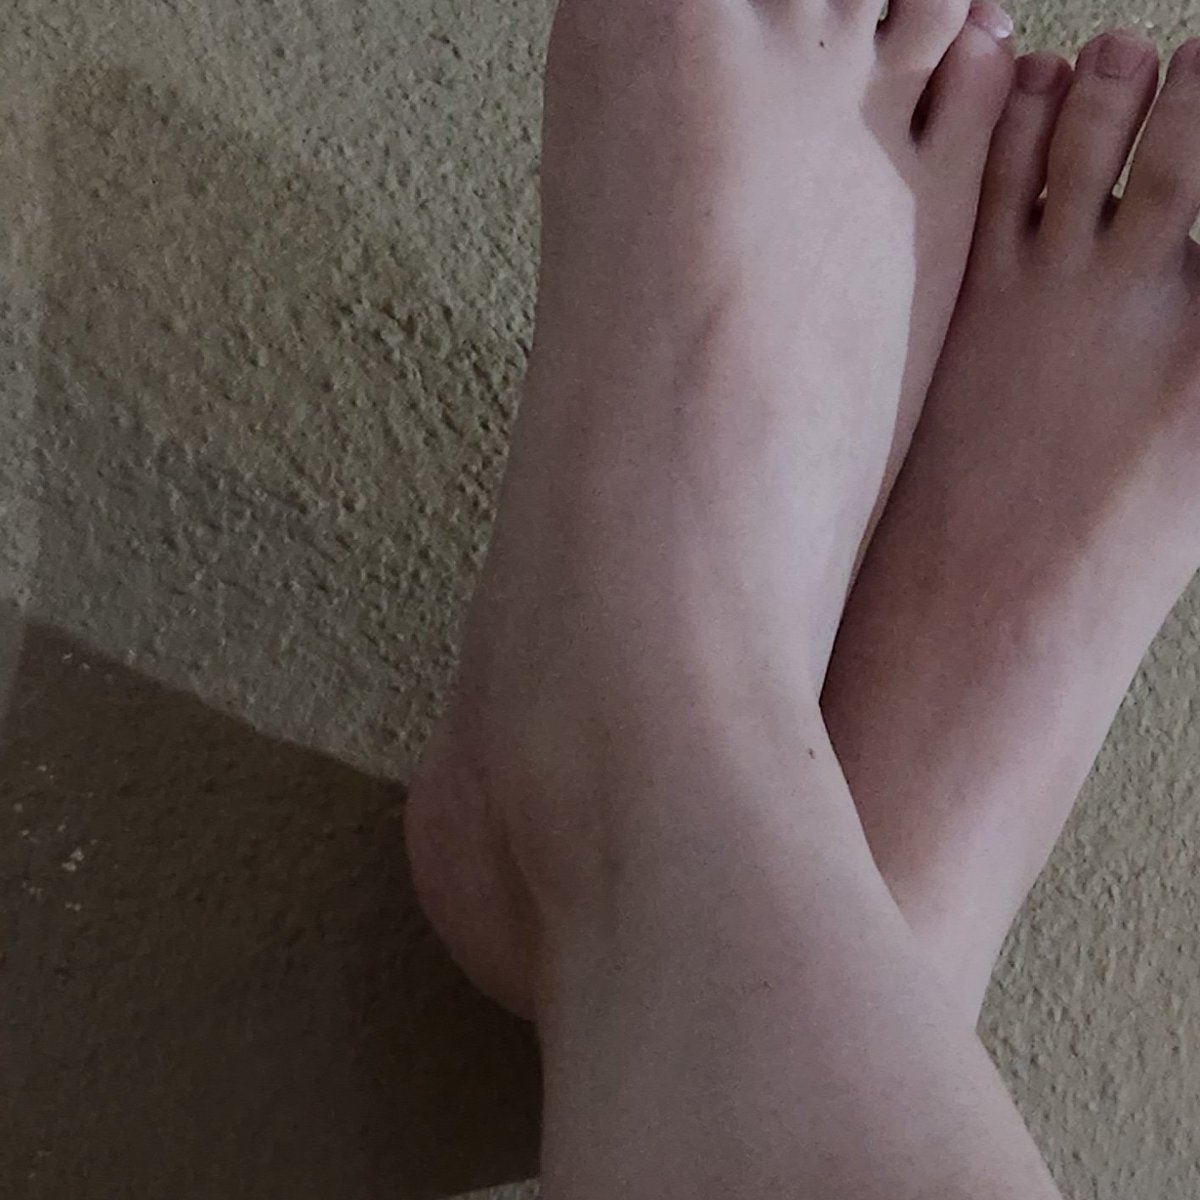 Hi daddy ❤️‍🔥

#feet #feetmodels #feetgram #feetpic #feetfetishgang #heatonfeetgang #feetlover #foot #footslave #footqueen #footy #footfemdom #footfetishist #footfetishworship #footfreak #footfettish #toes #toeslovers #toe #toenails #toefetish #toering #sole #soles #solebich